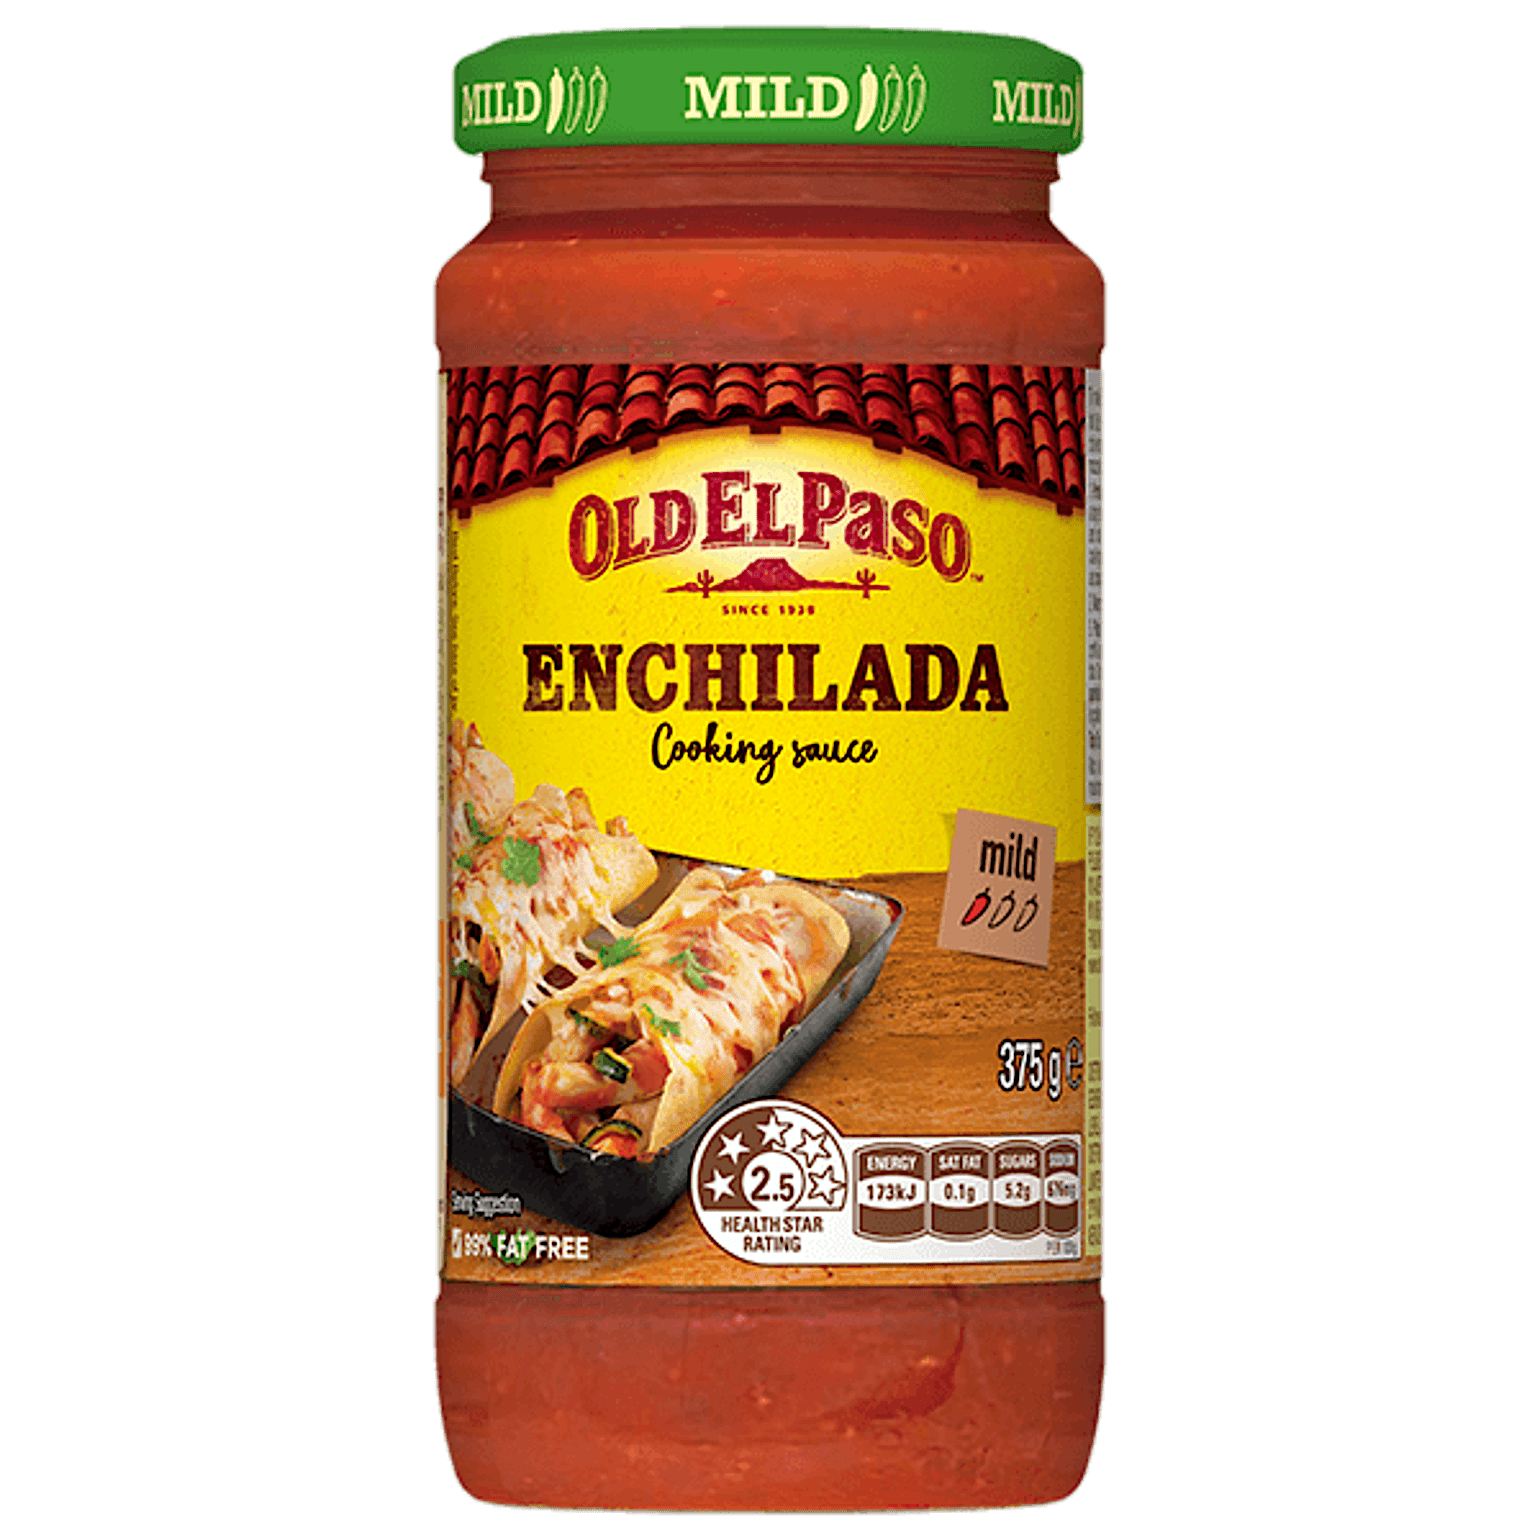 a glass jar of Old El Paso's mild enchilada cooking sauce (375g)